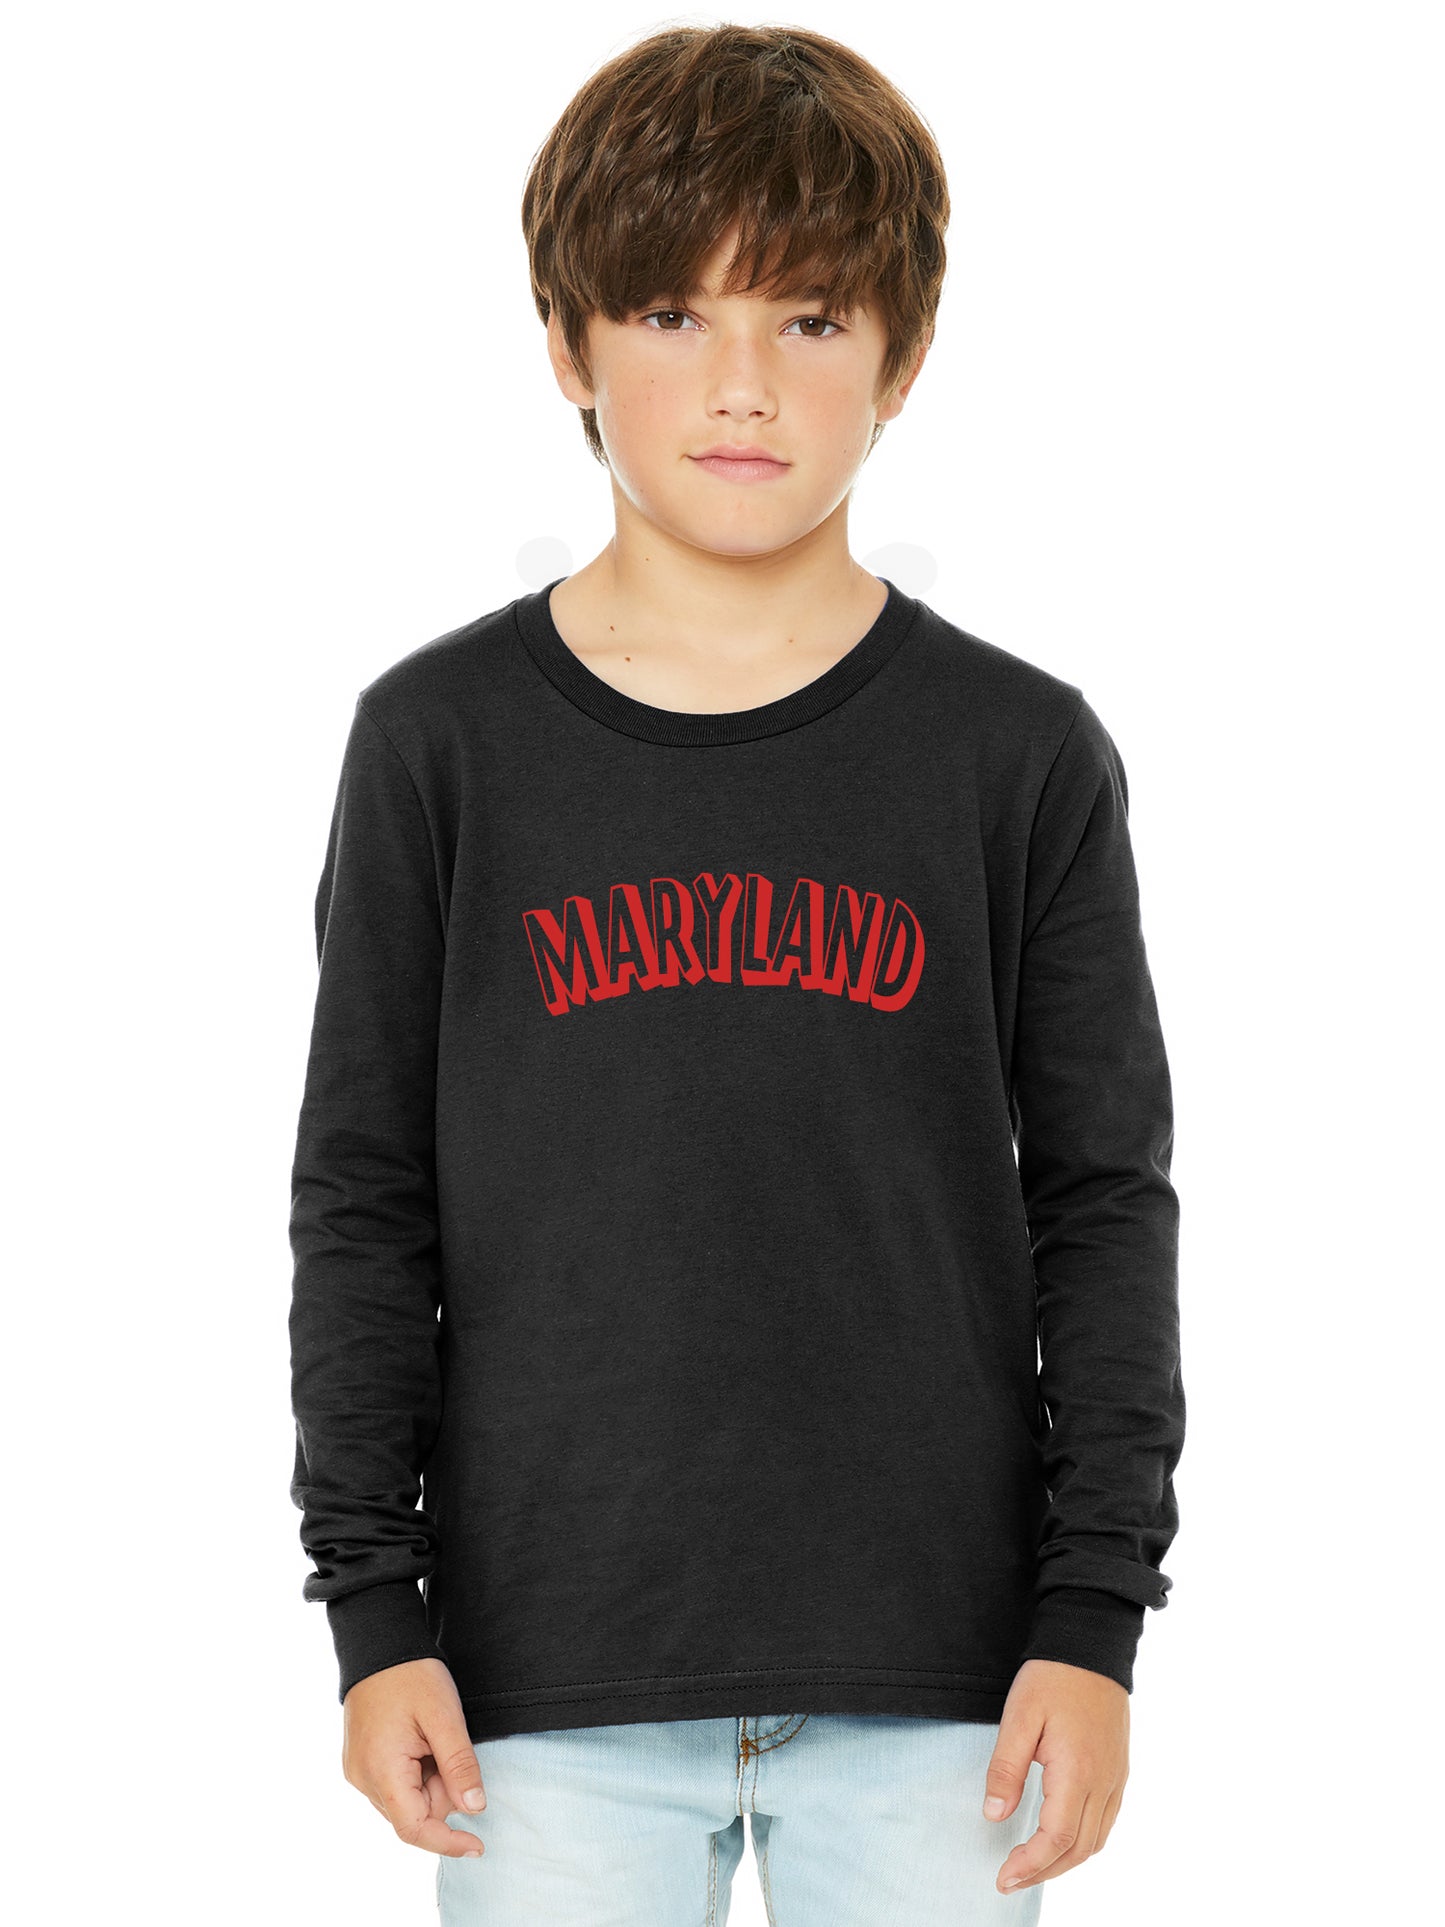 Daxton Youth Long Sleeve Maryland Basic Tshirt